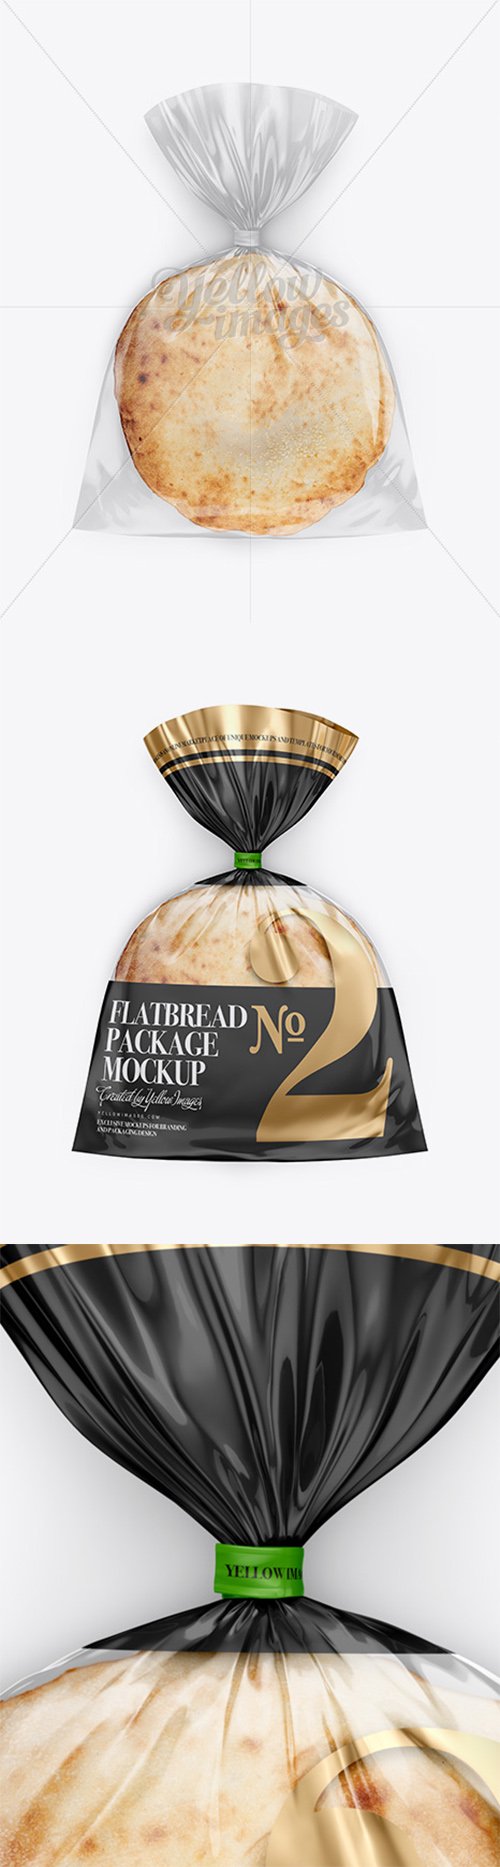 Bag W/ Flatbread Mockup 18141 TIF